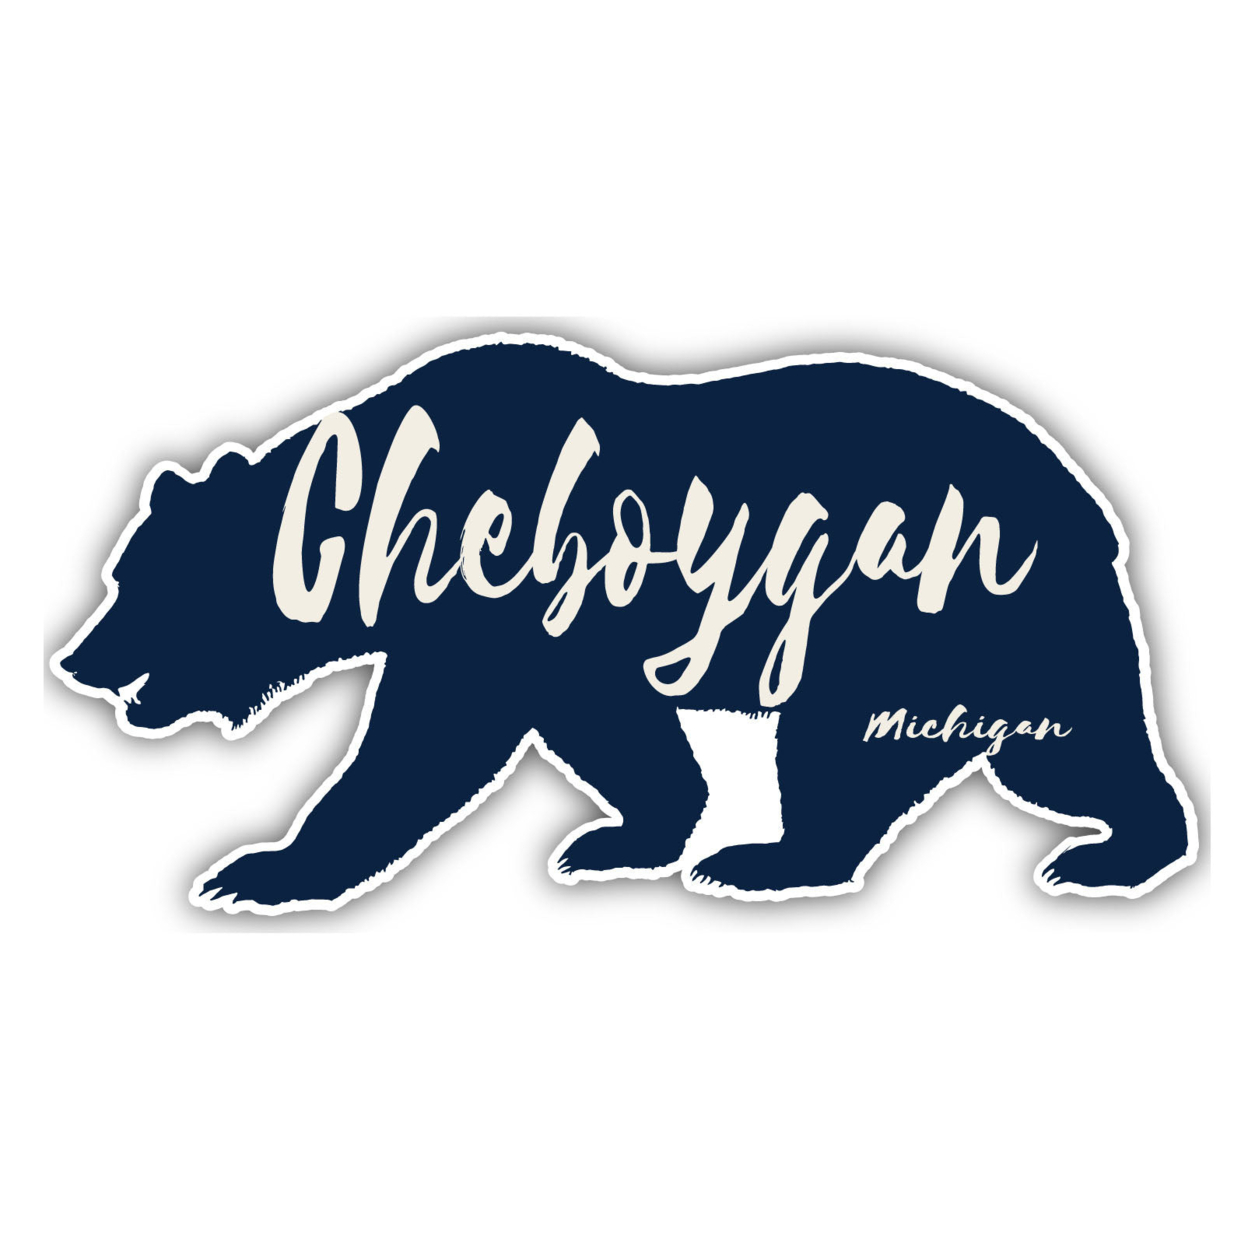 Cheboygan Michigan Souvenir Decorative Stickers (Choose Theme And Size) - 4-Pack, 4-Inch, Bear